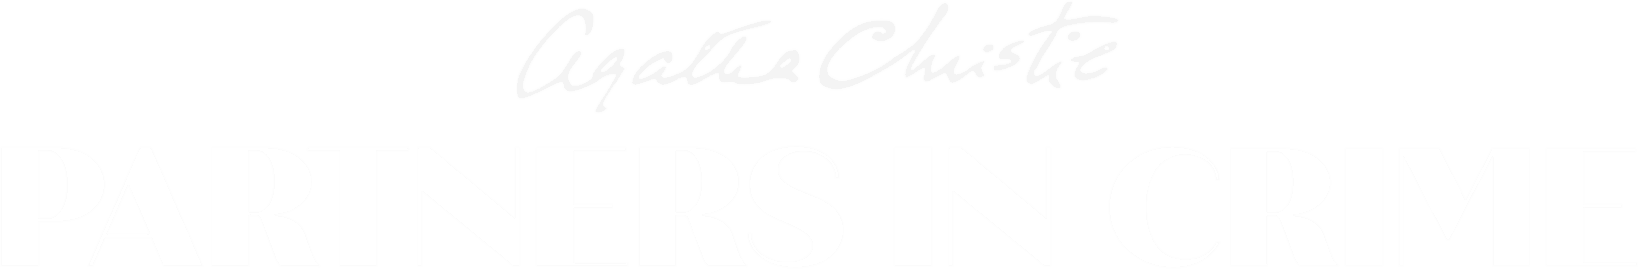 Agatha Christie's Partners in Crime logo